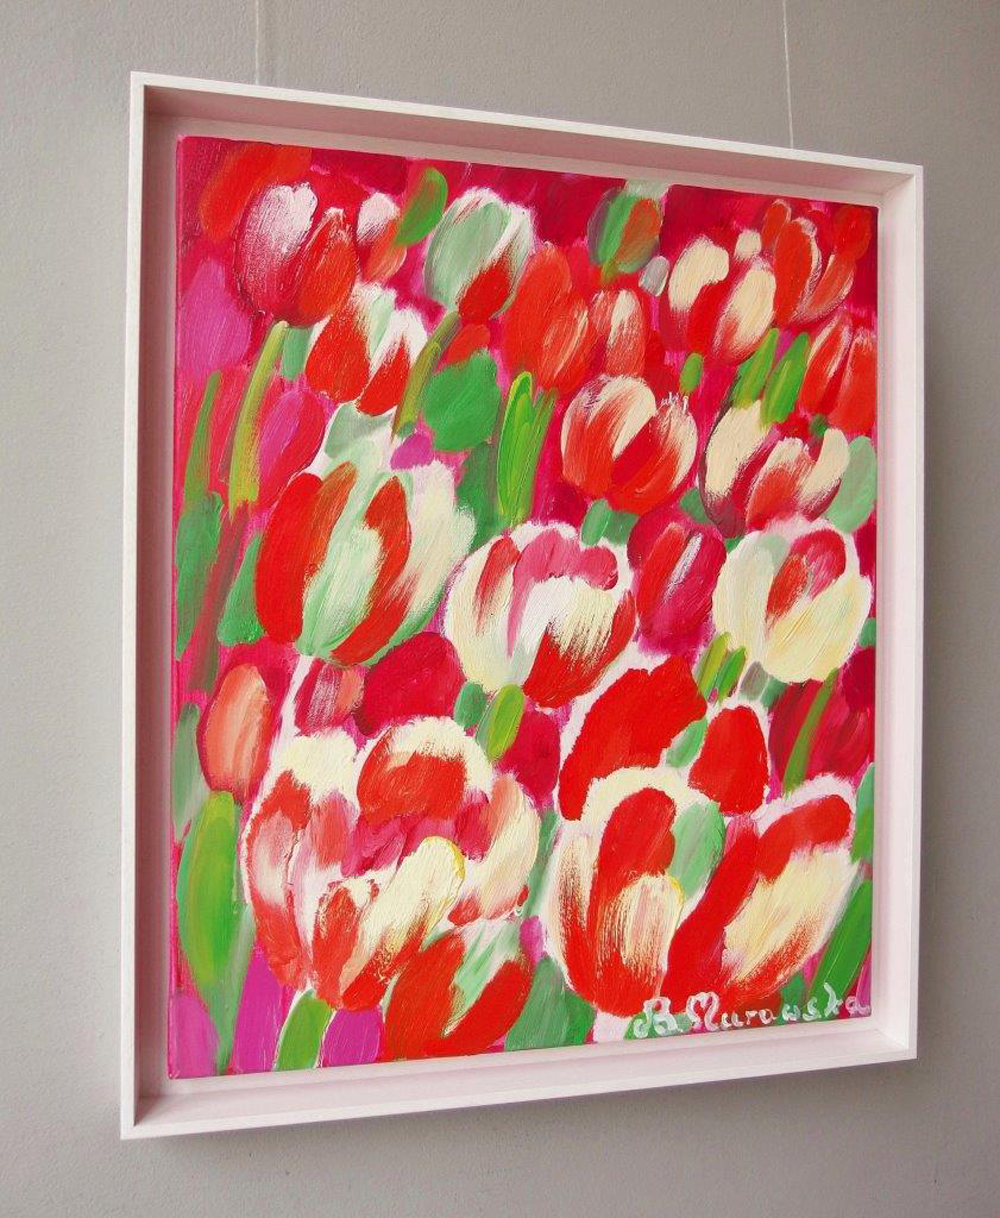 Beata Murawska - Virgin tulips (Oil on Canvas | Wymiary: 56 x 66 cm | Cena: 3800 PLN)